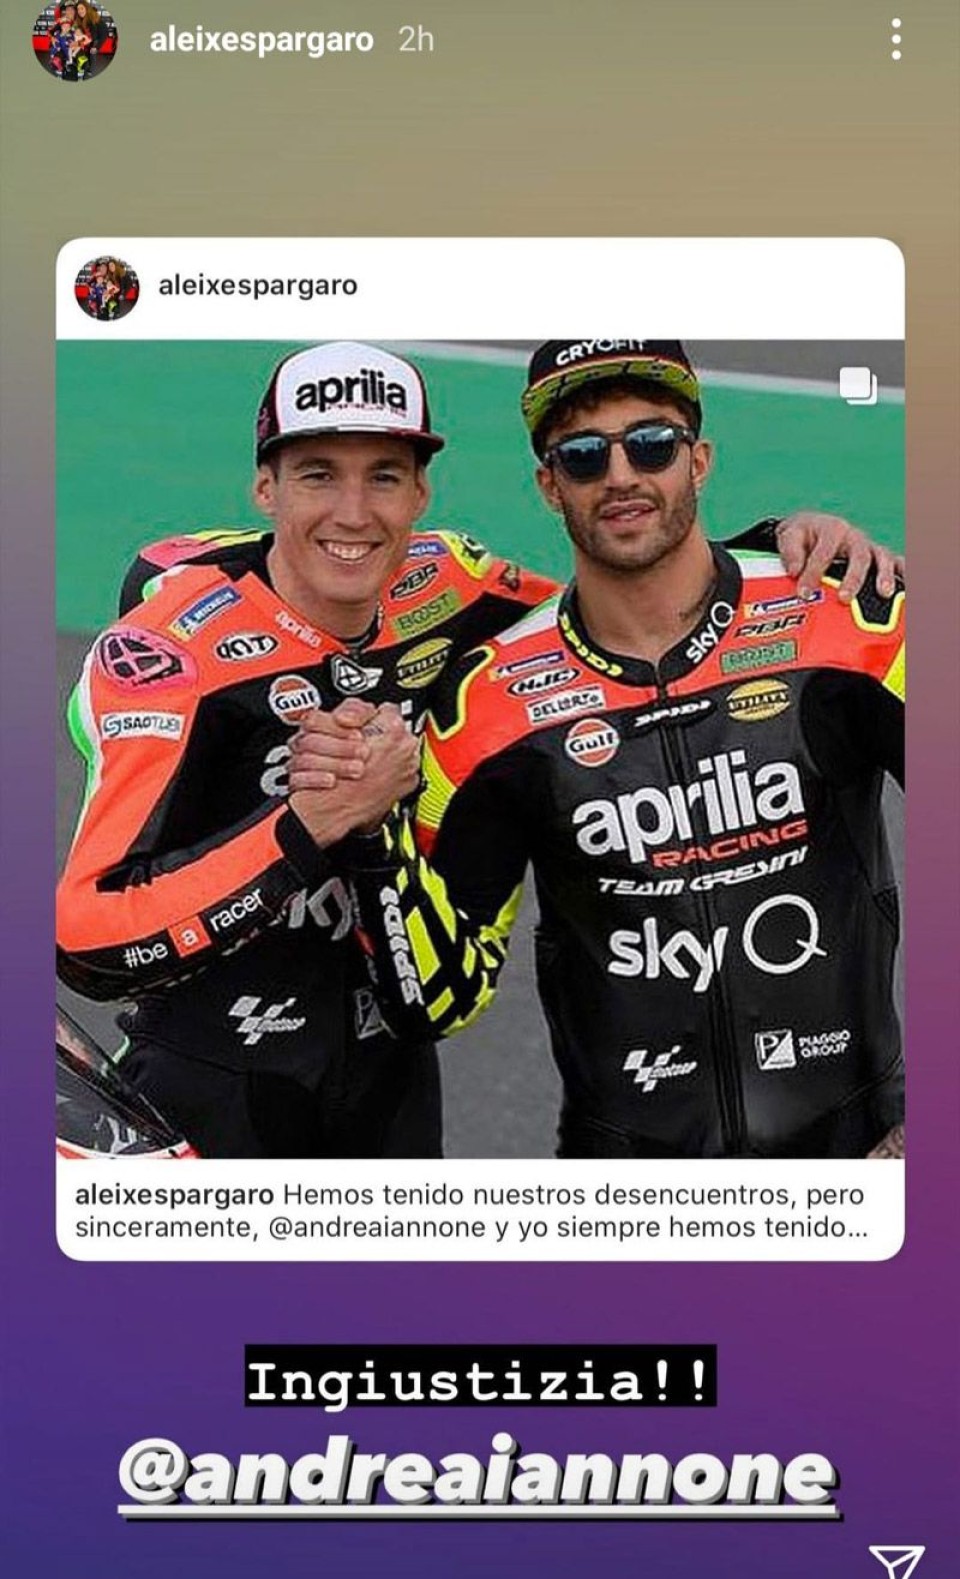 MotoGP: Aleix Espargaró defends Andrea Iannone: "Injustice!!"